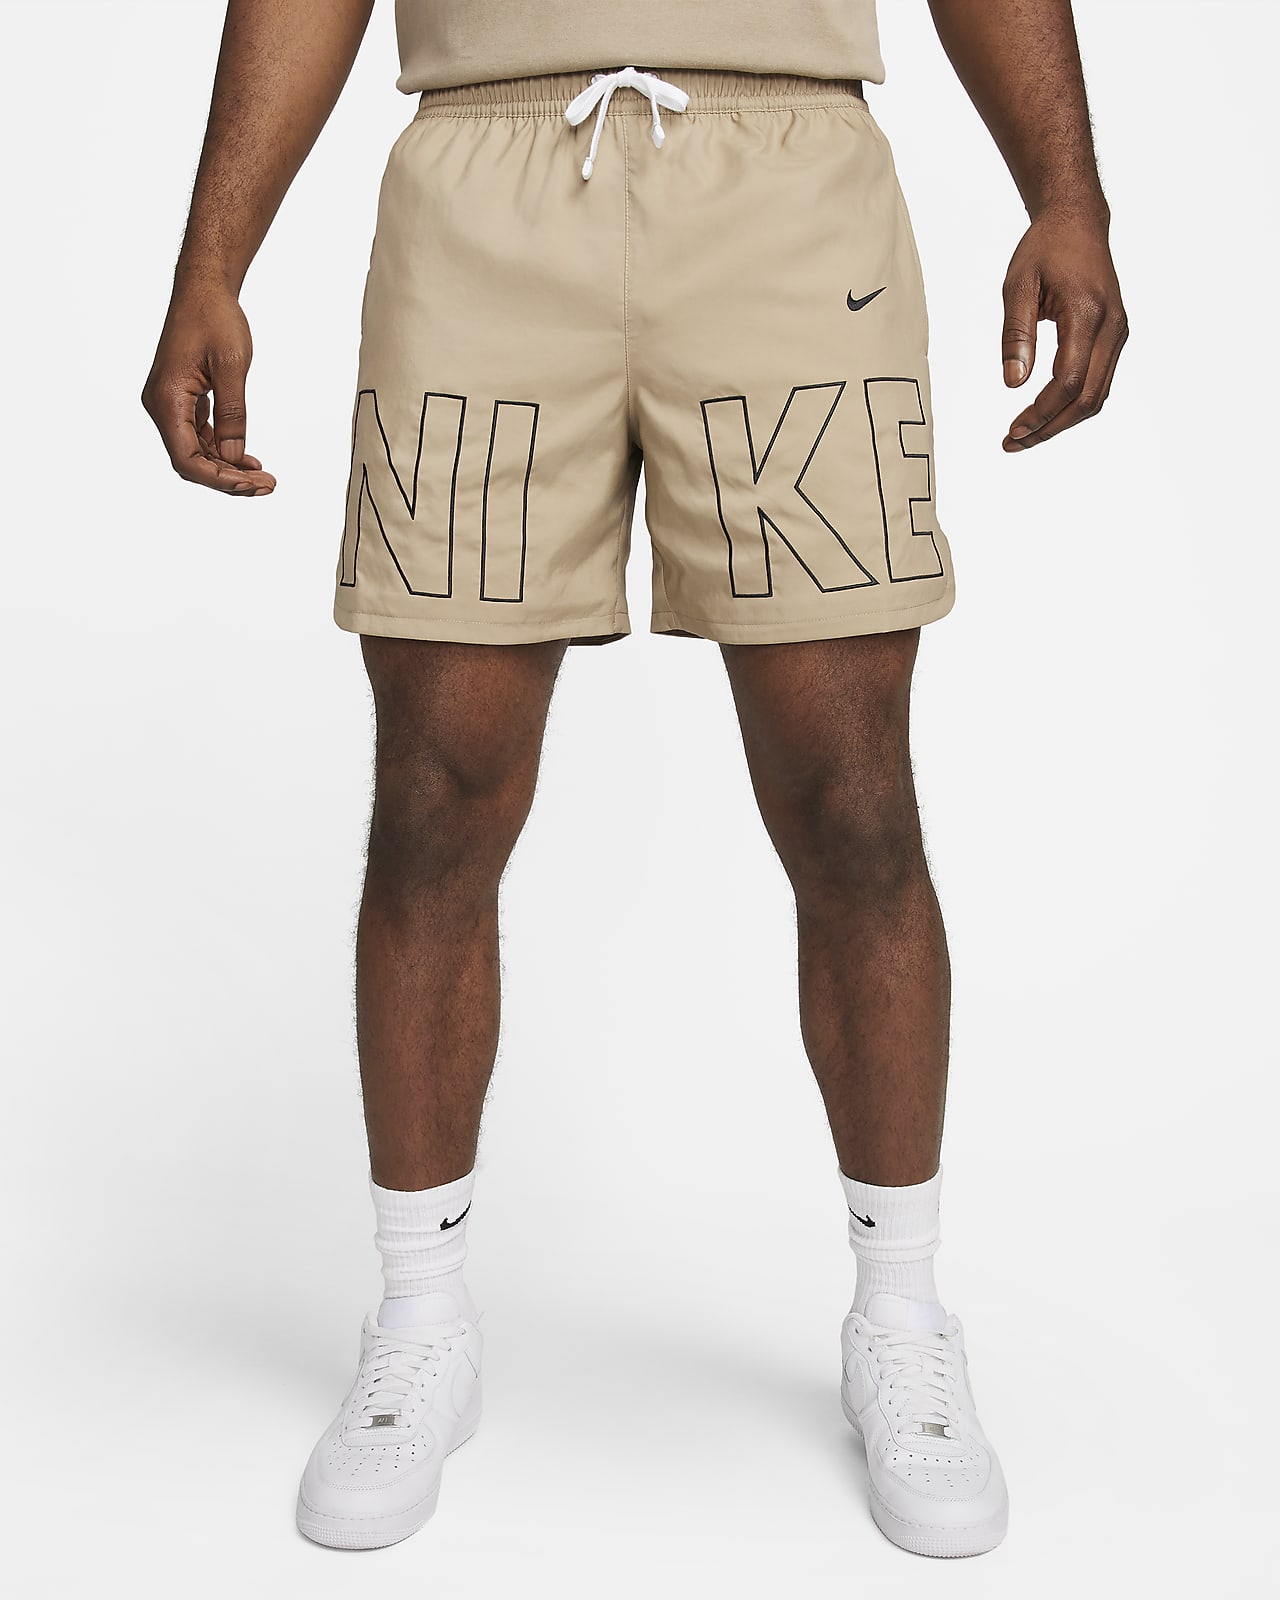 Pin on Nike shorts